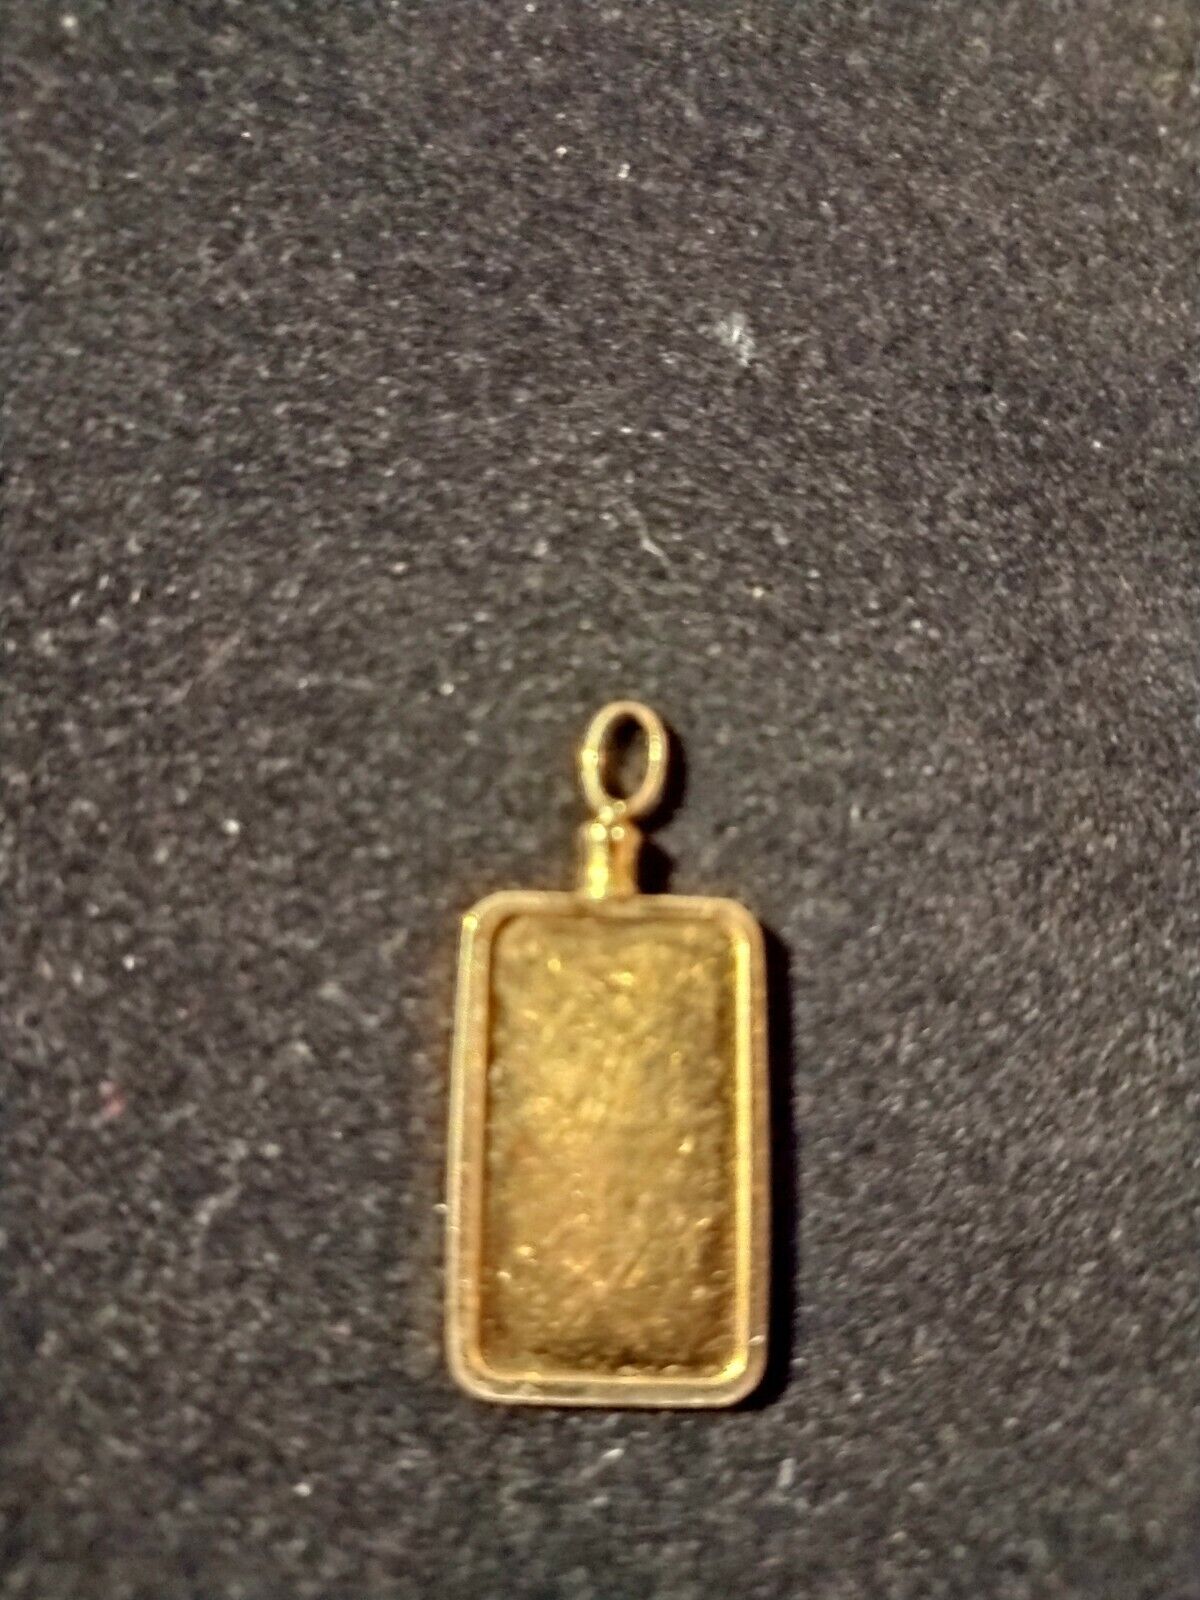 Solid .999 fine Gold Bullion 5 gram Mitsubishi ingot in 18k Gold Pendant  #5326